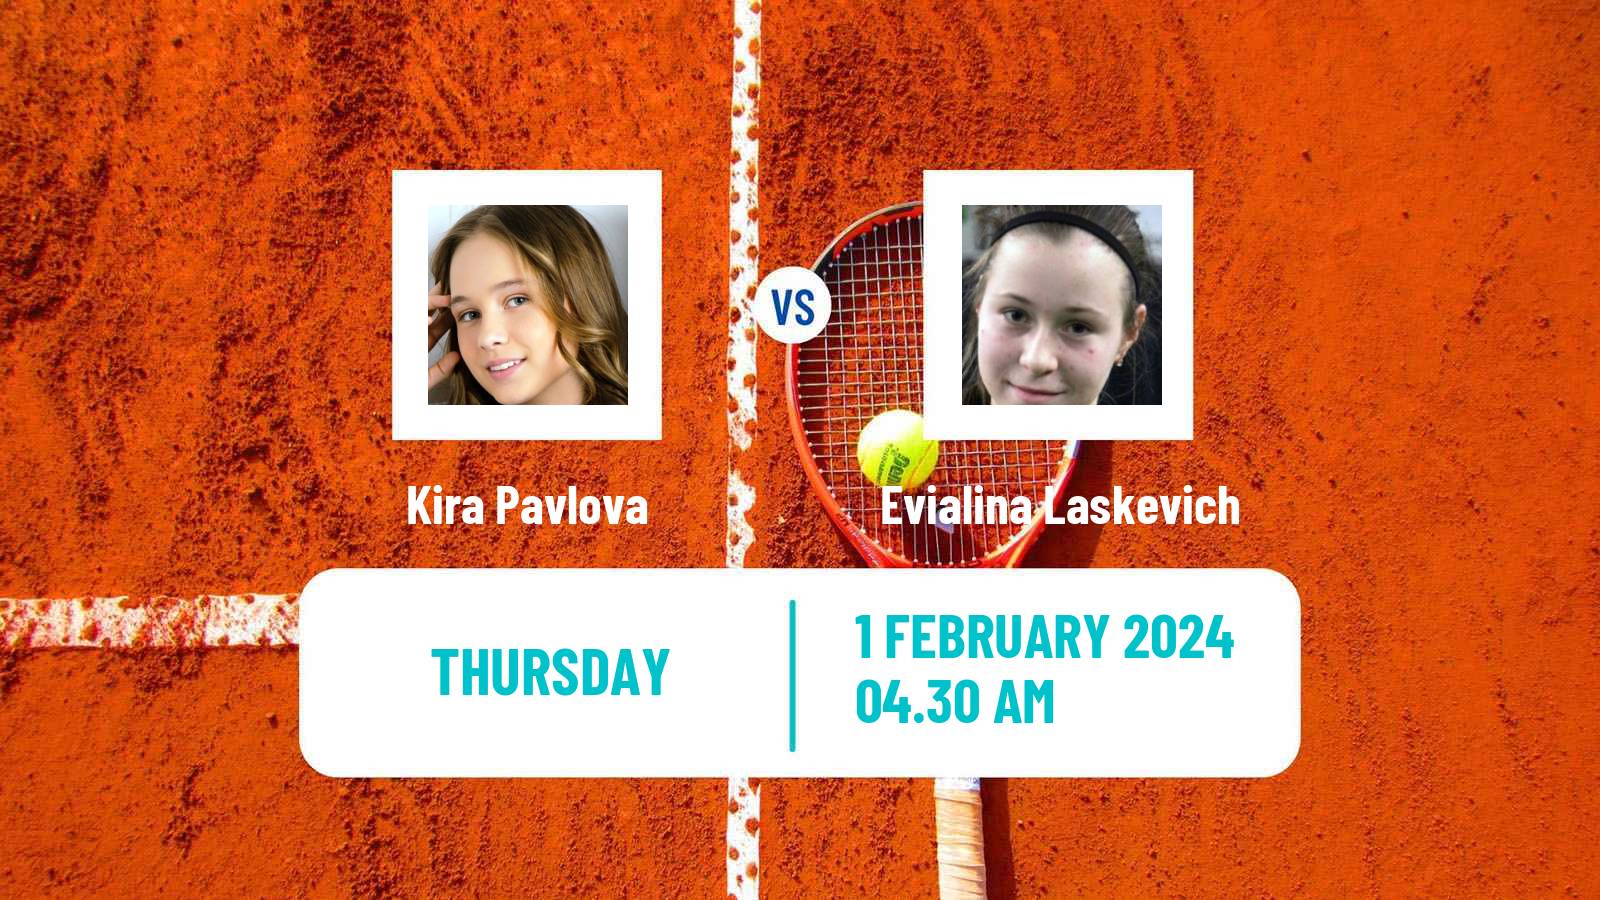 Tennis ITF W35 Sharm Elsheikh Women Kira Pavlova - Evialina Laskevich